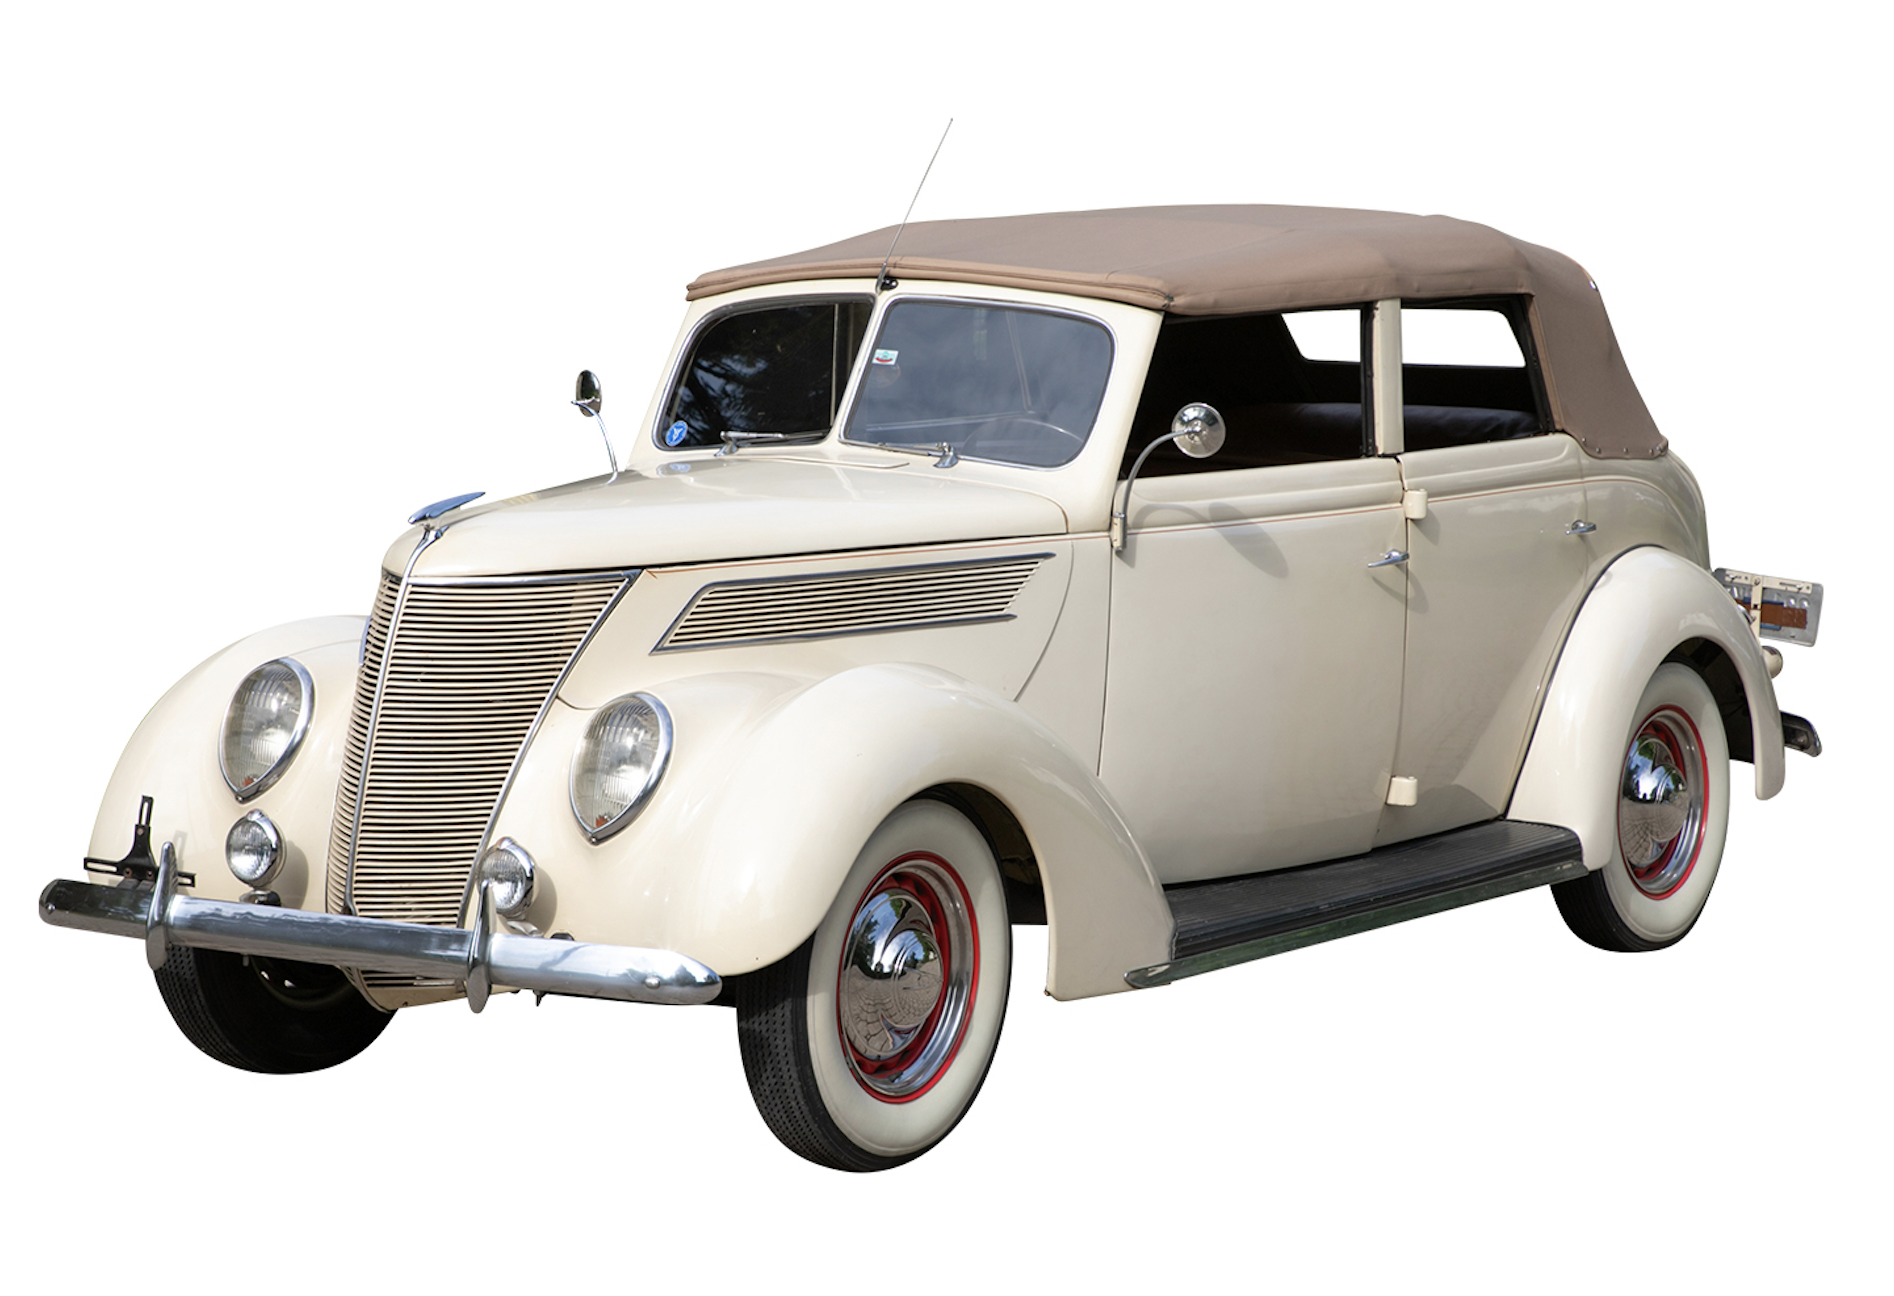  1937 Ford Model 78 Deluxe convertible sedan, CA$32,450